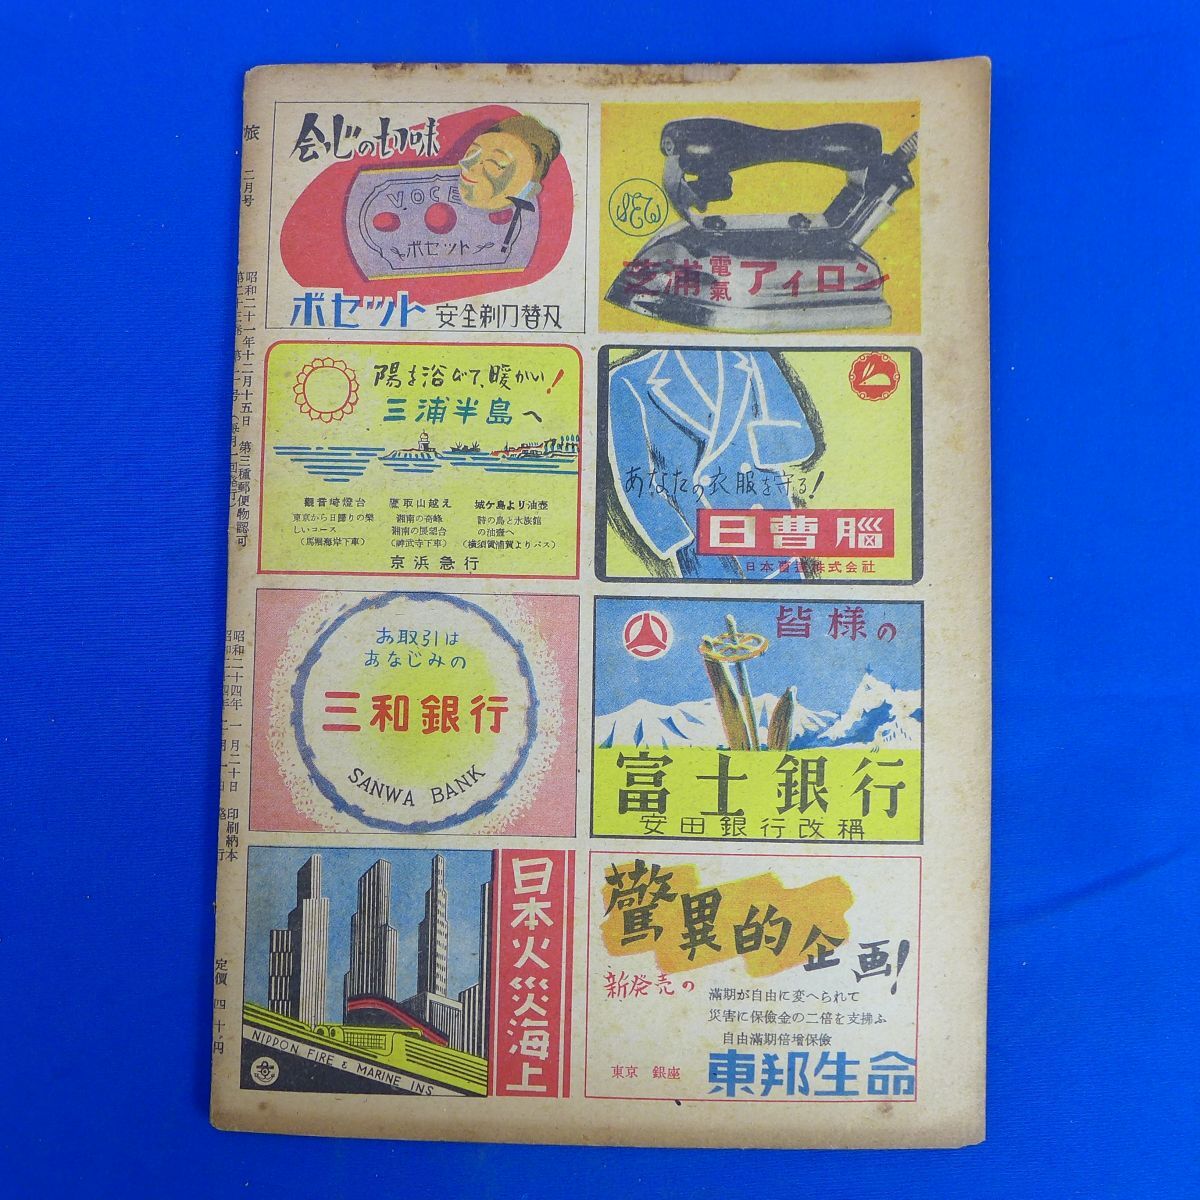 yuS6878*[ travel magazine / Japan travel . company ][.] Showa era 24 year 2 month number higashi . old road chronicle . rice field . man Nakamura direct person / Ikeda ../ travel magazine / war after advertisement 